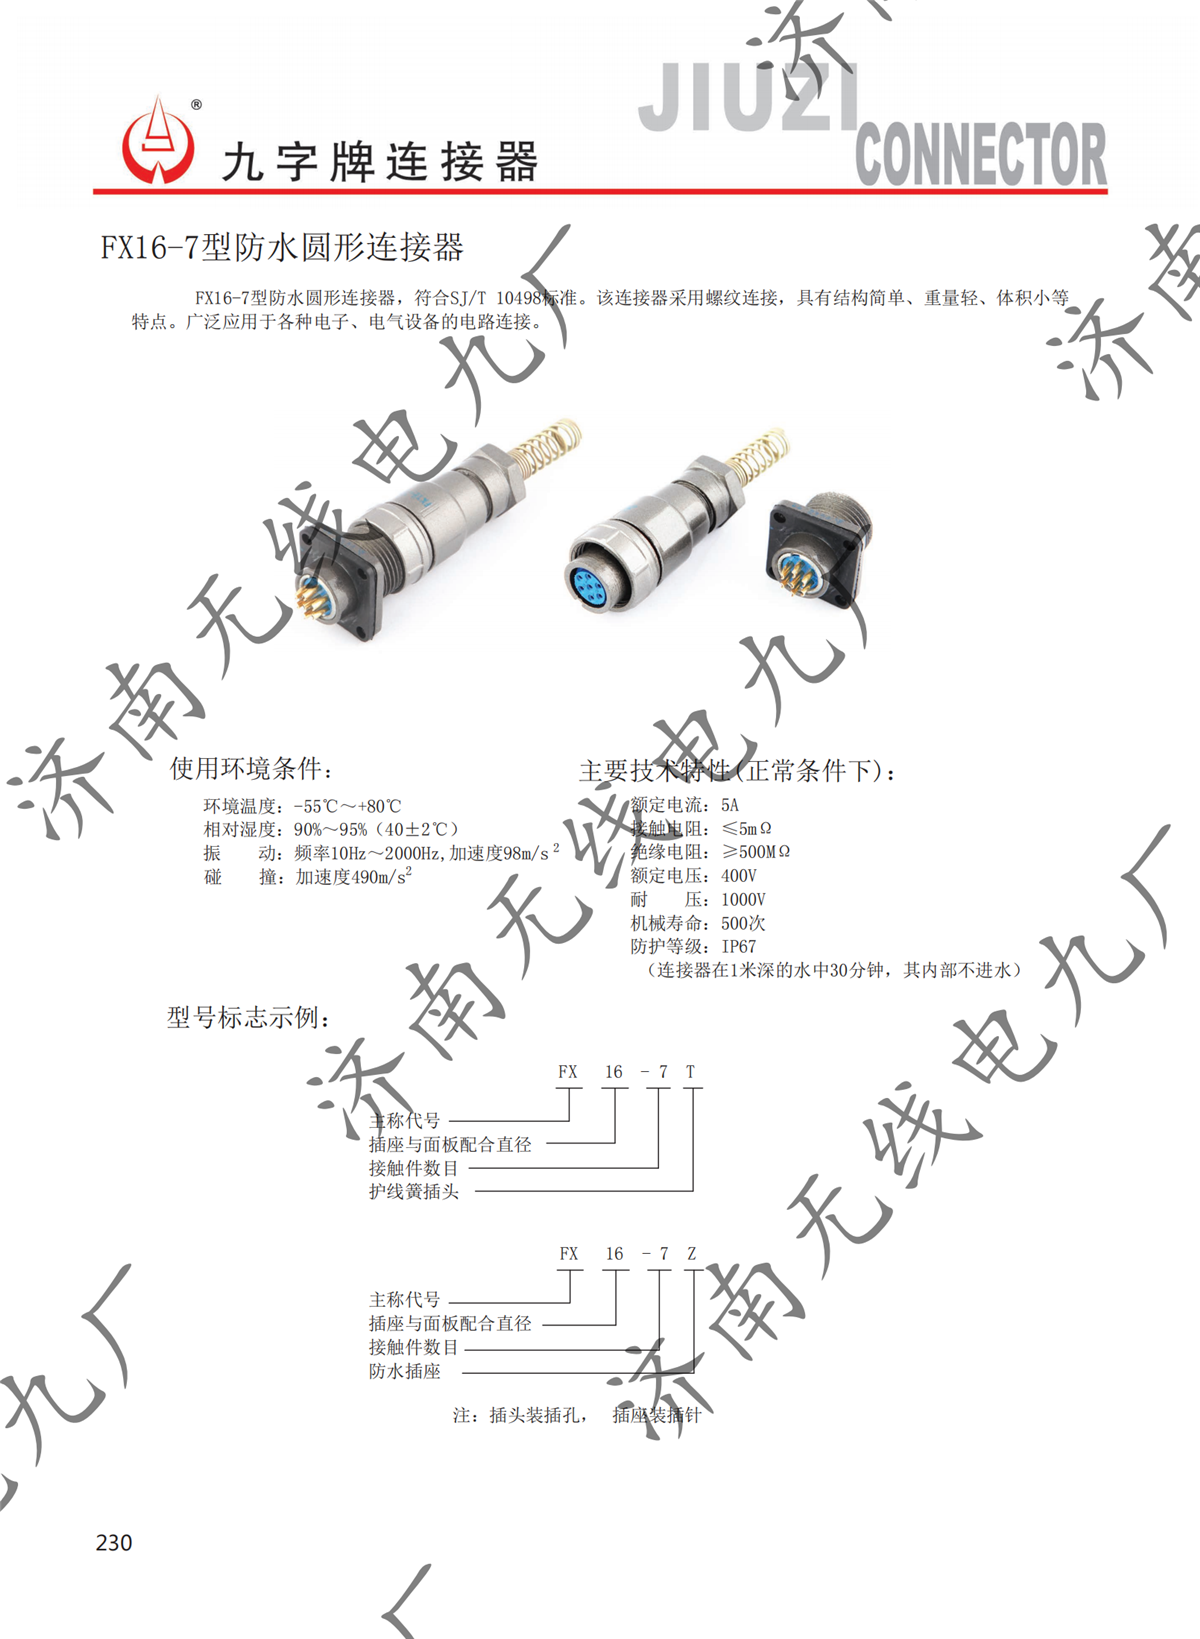 FX16型防水圆形连接器_00.png